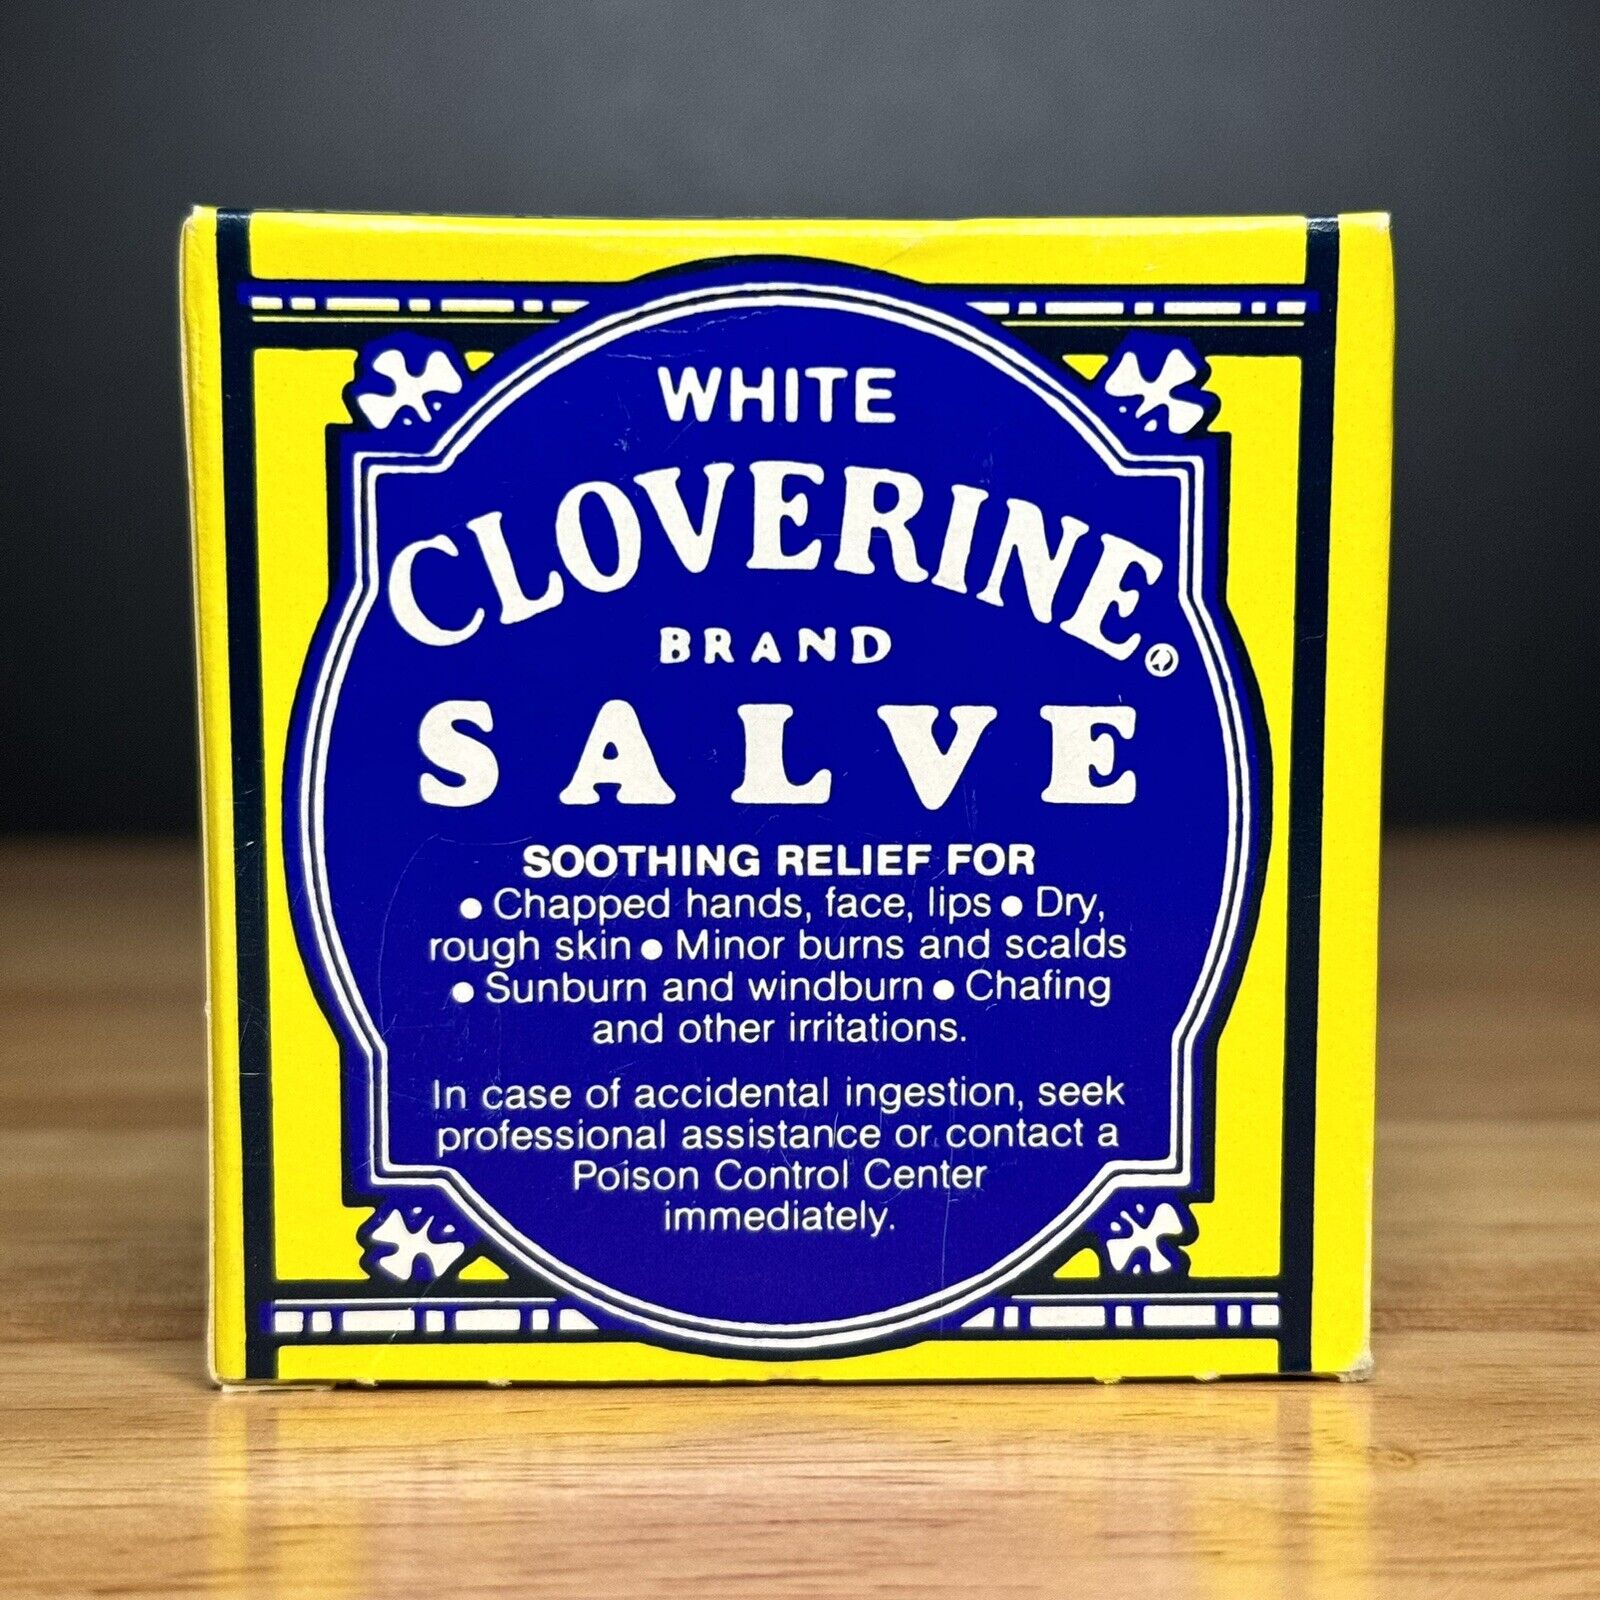 ⚡️WHITE Cloverine Petrolatum Salve Skin Protectant Tin Box 1 oz ⚠️ NEW Old Stock